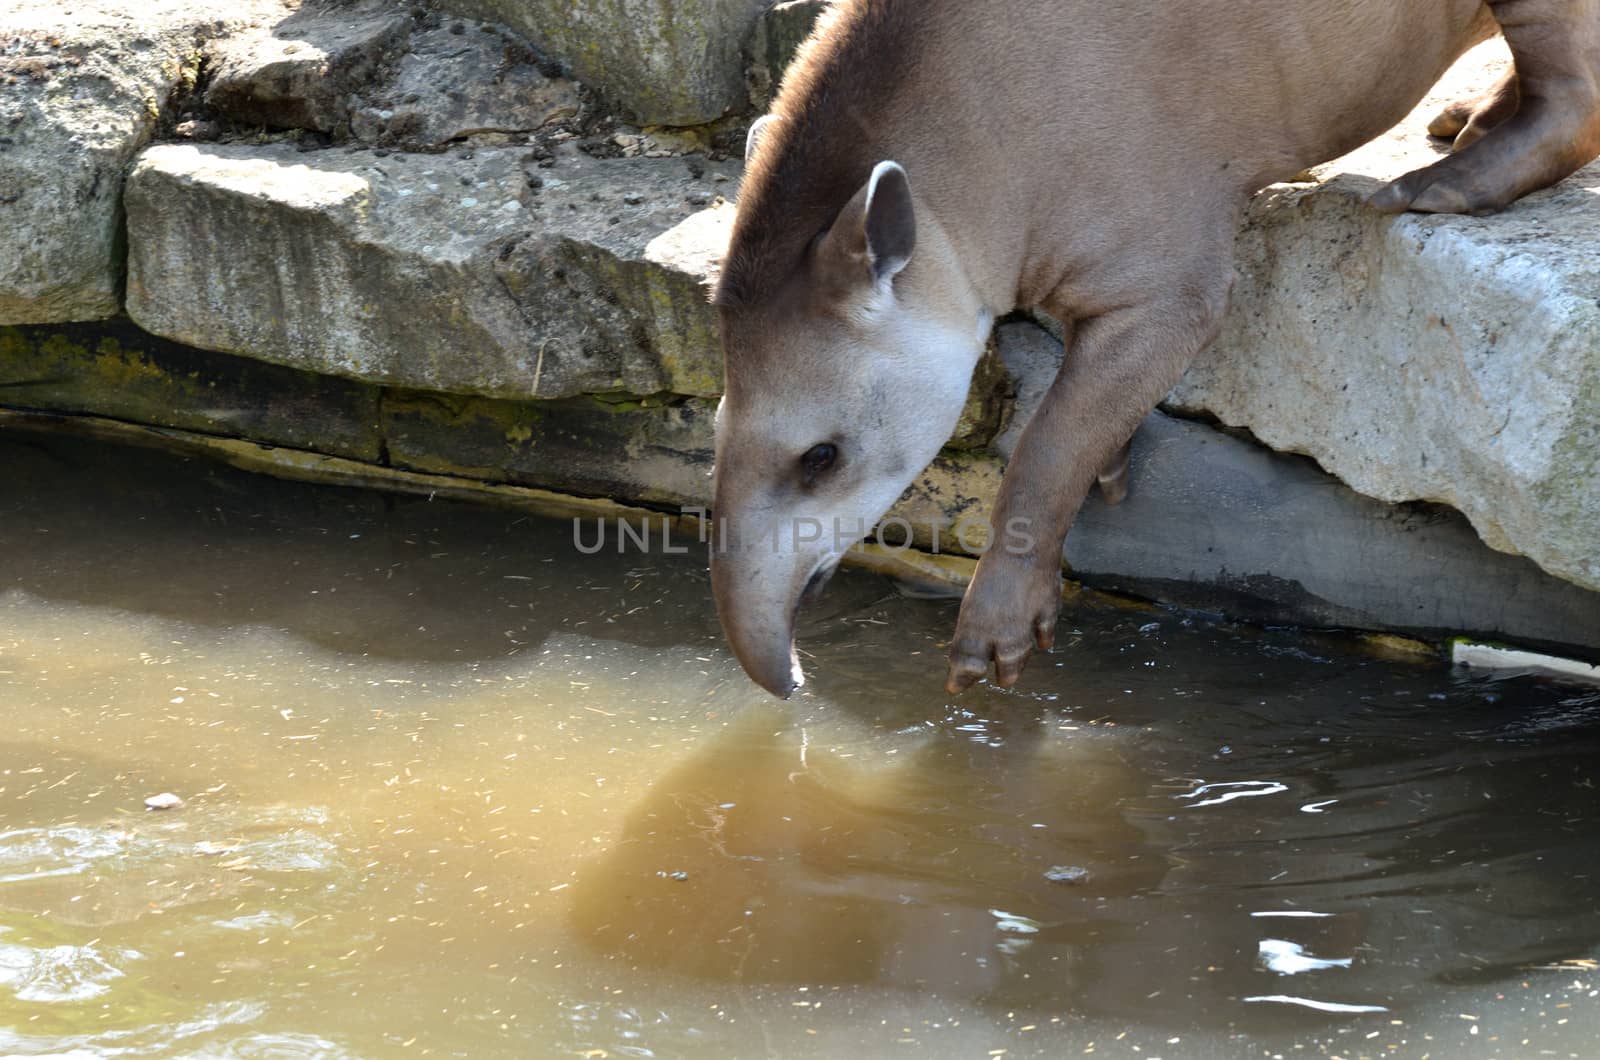 Young Tapir testing the water